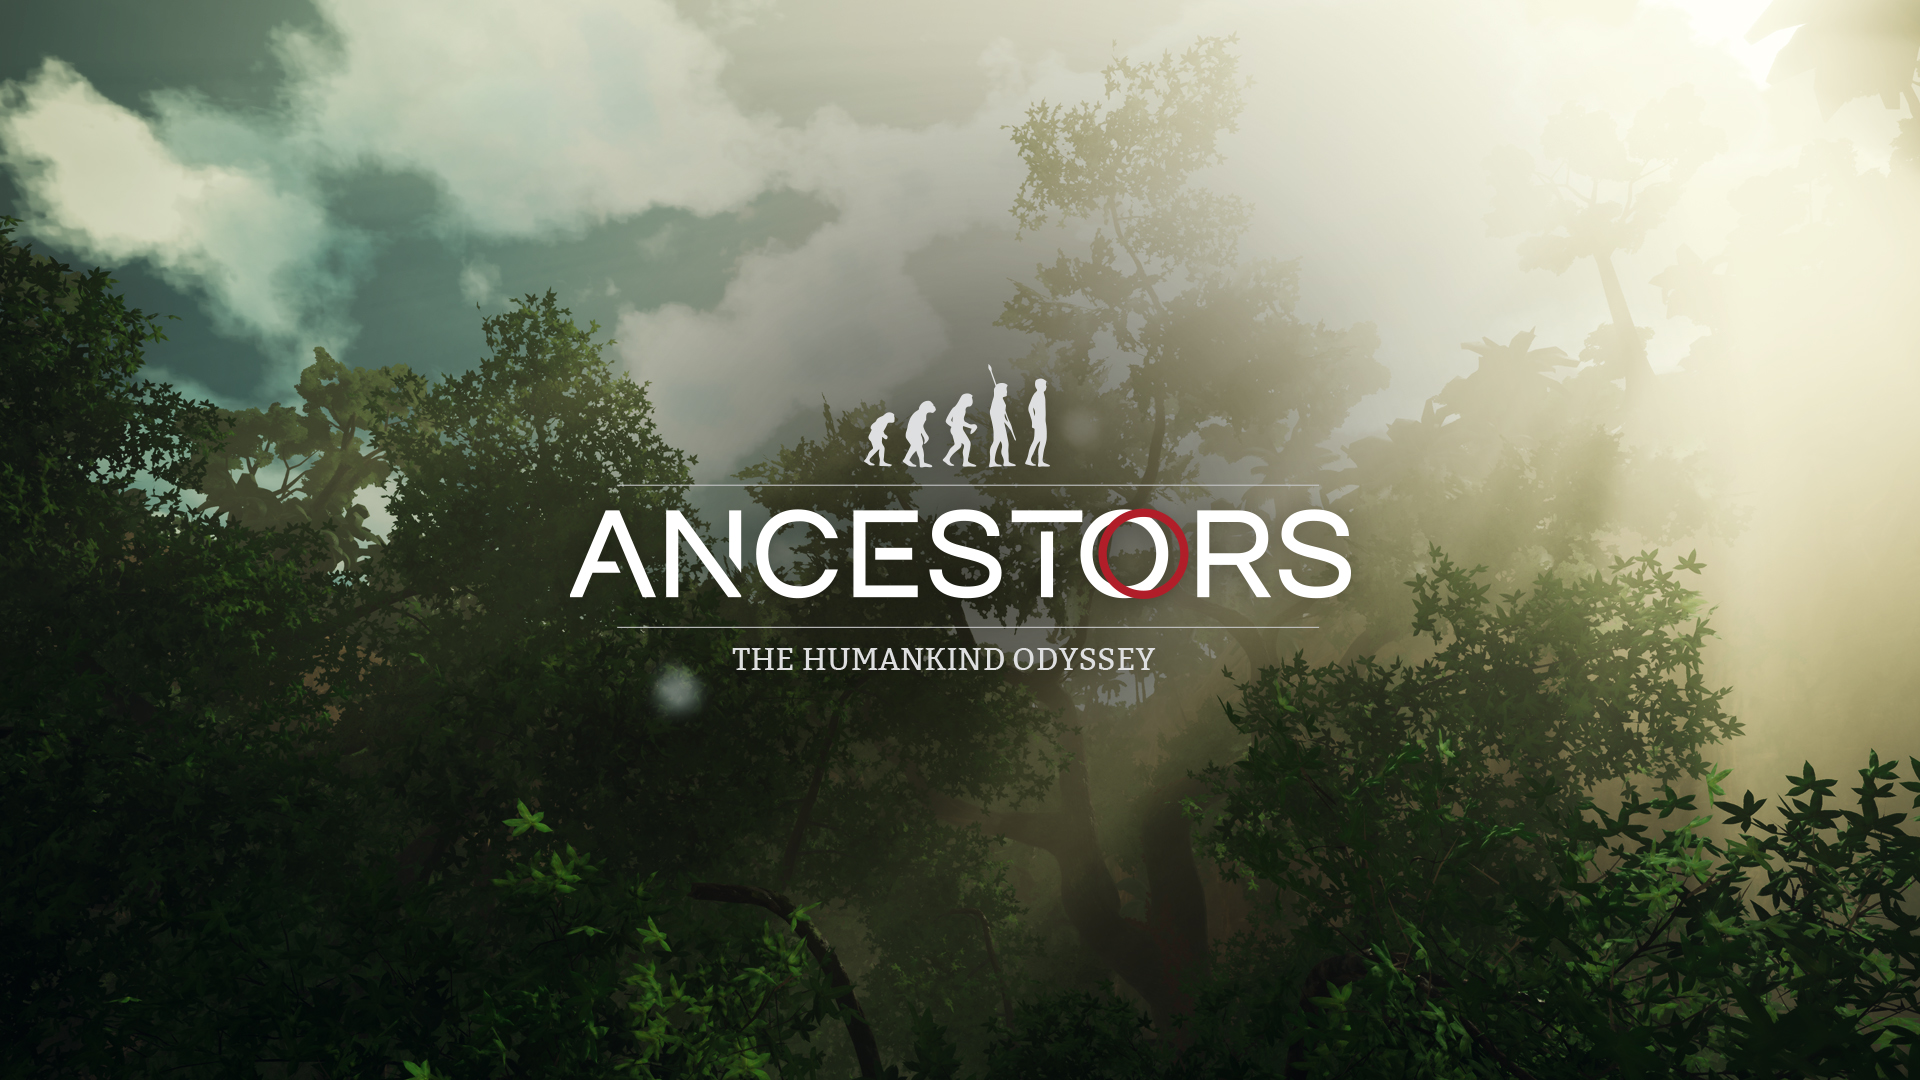 ancestors the humankind odyssey xbox